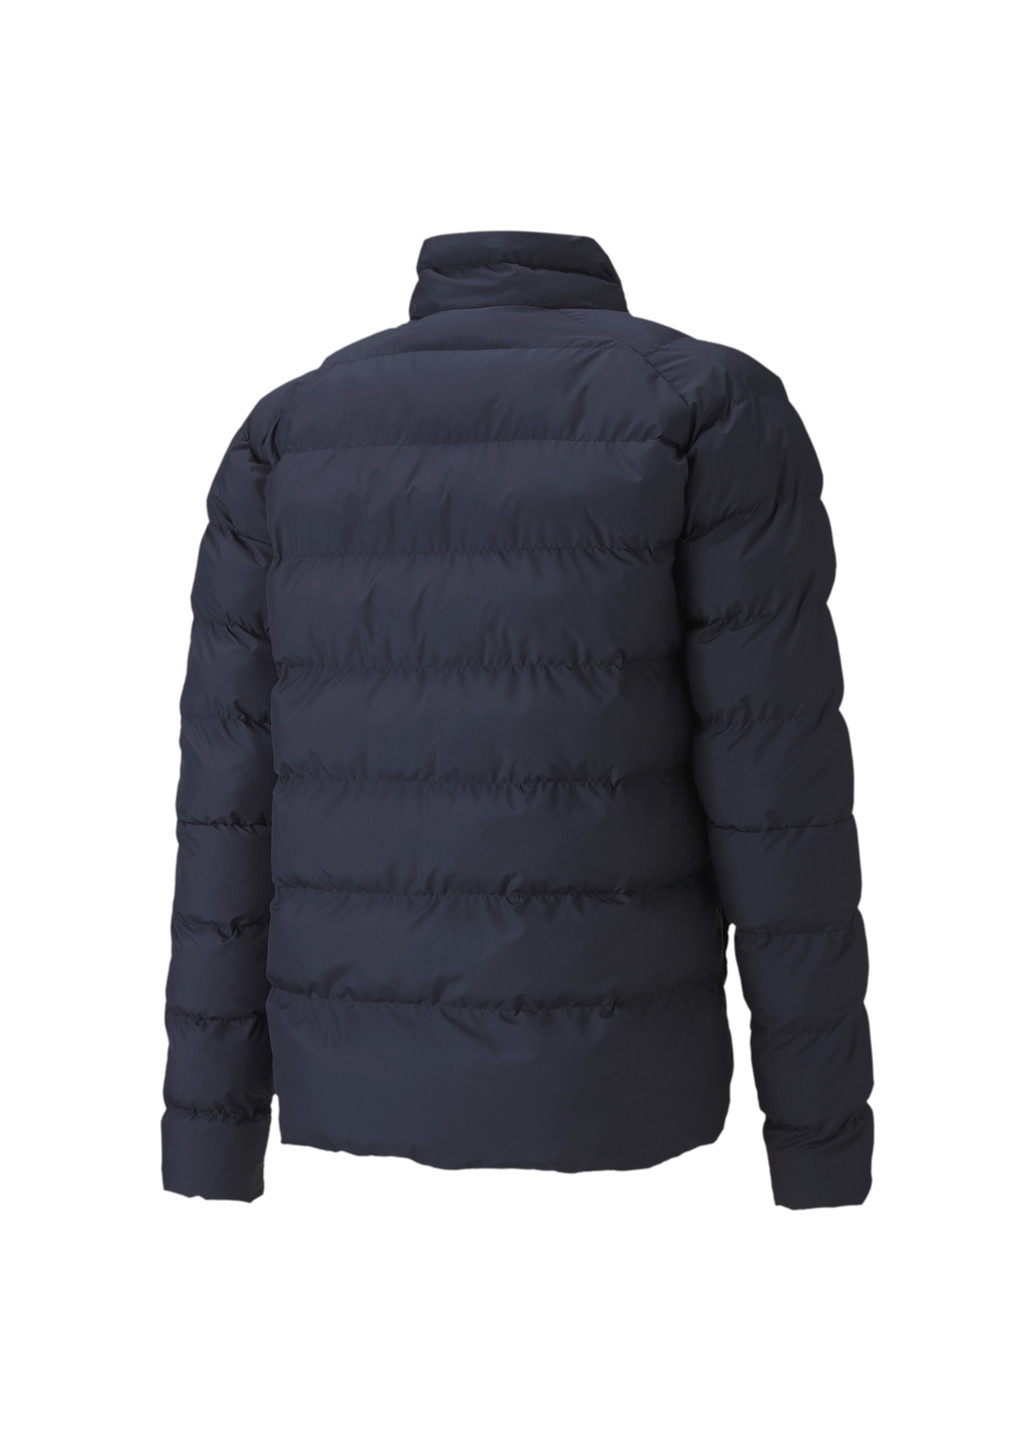 Синяя демисезонная куртка warmcell lightweight jacket Puma